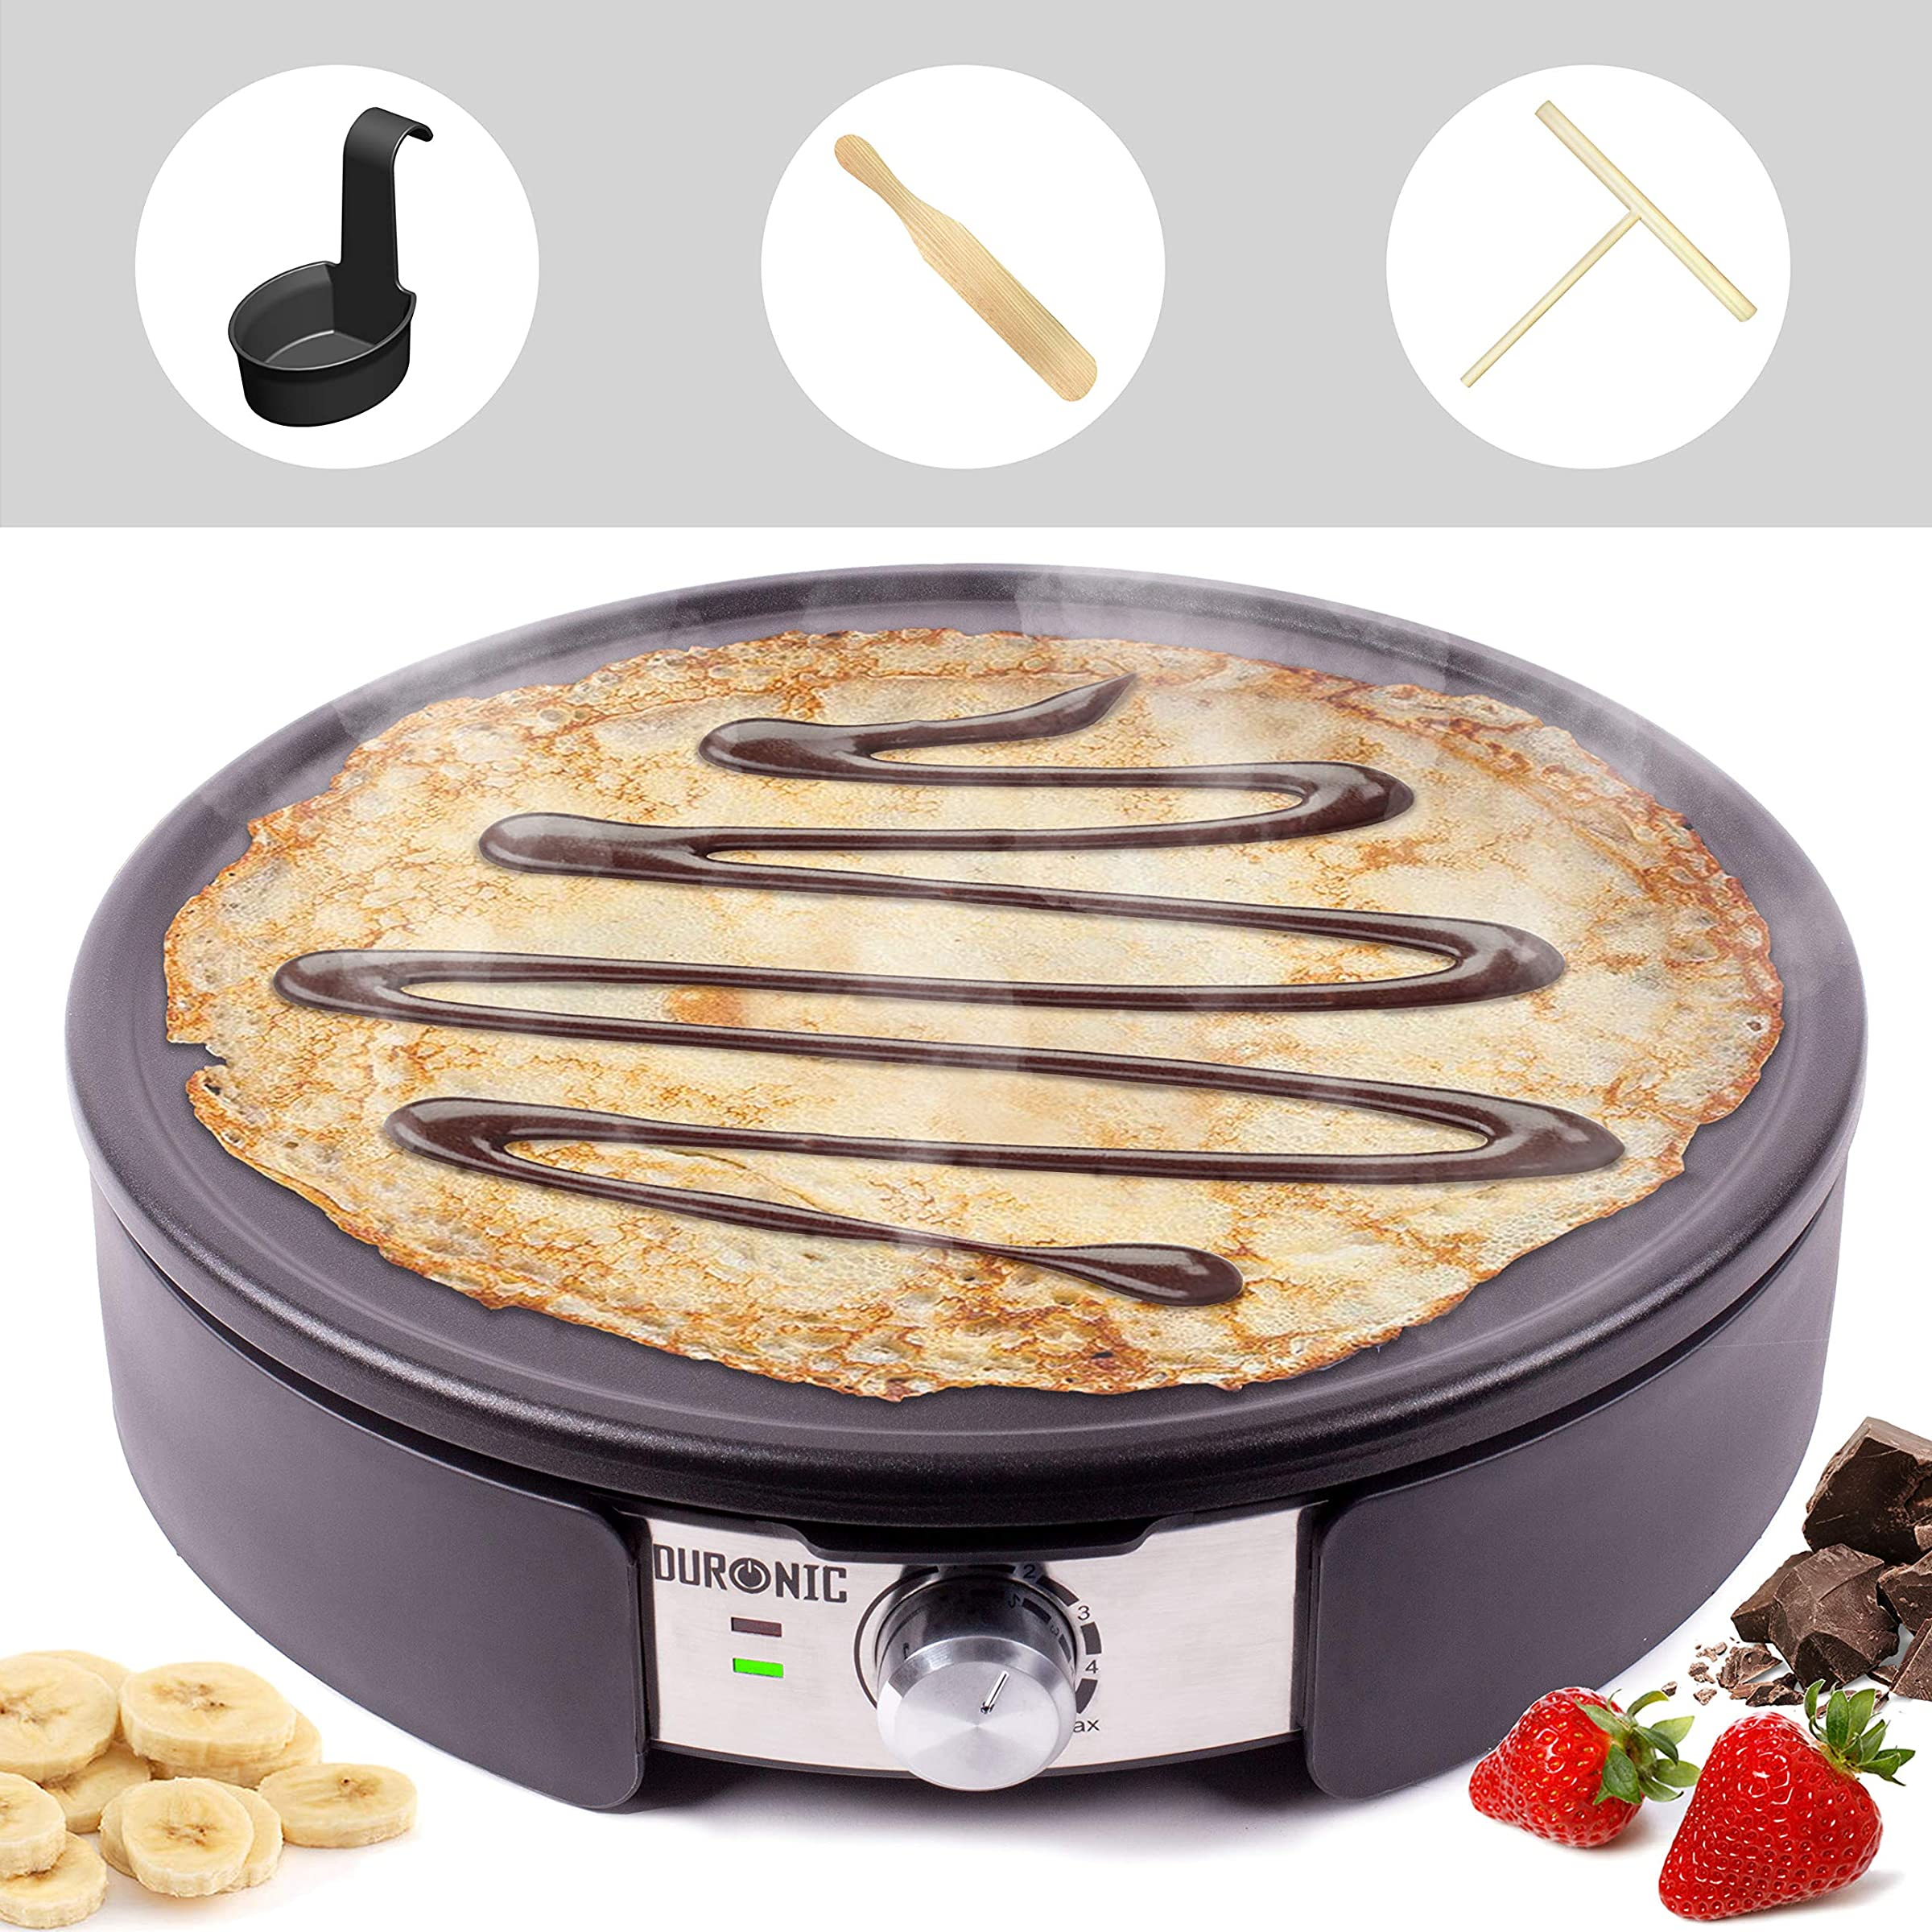 Duronic Pm152 Crepera de 1500w con placa antiadherente 37 cm – temperatura regulable accesorios incluidos ideal para hacer crêpes pancakes tortitas tortillas creps panqueques 37cm 1500